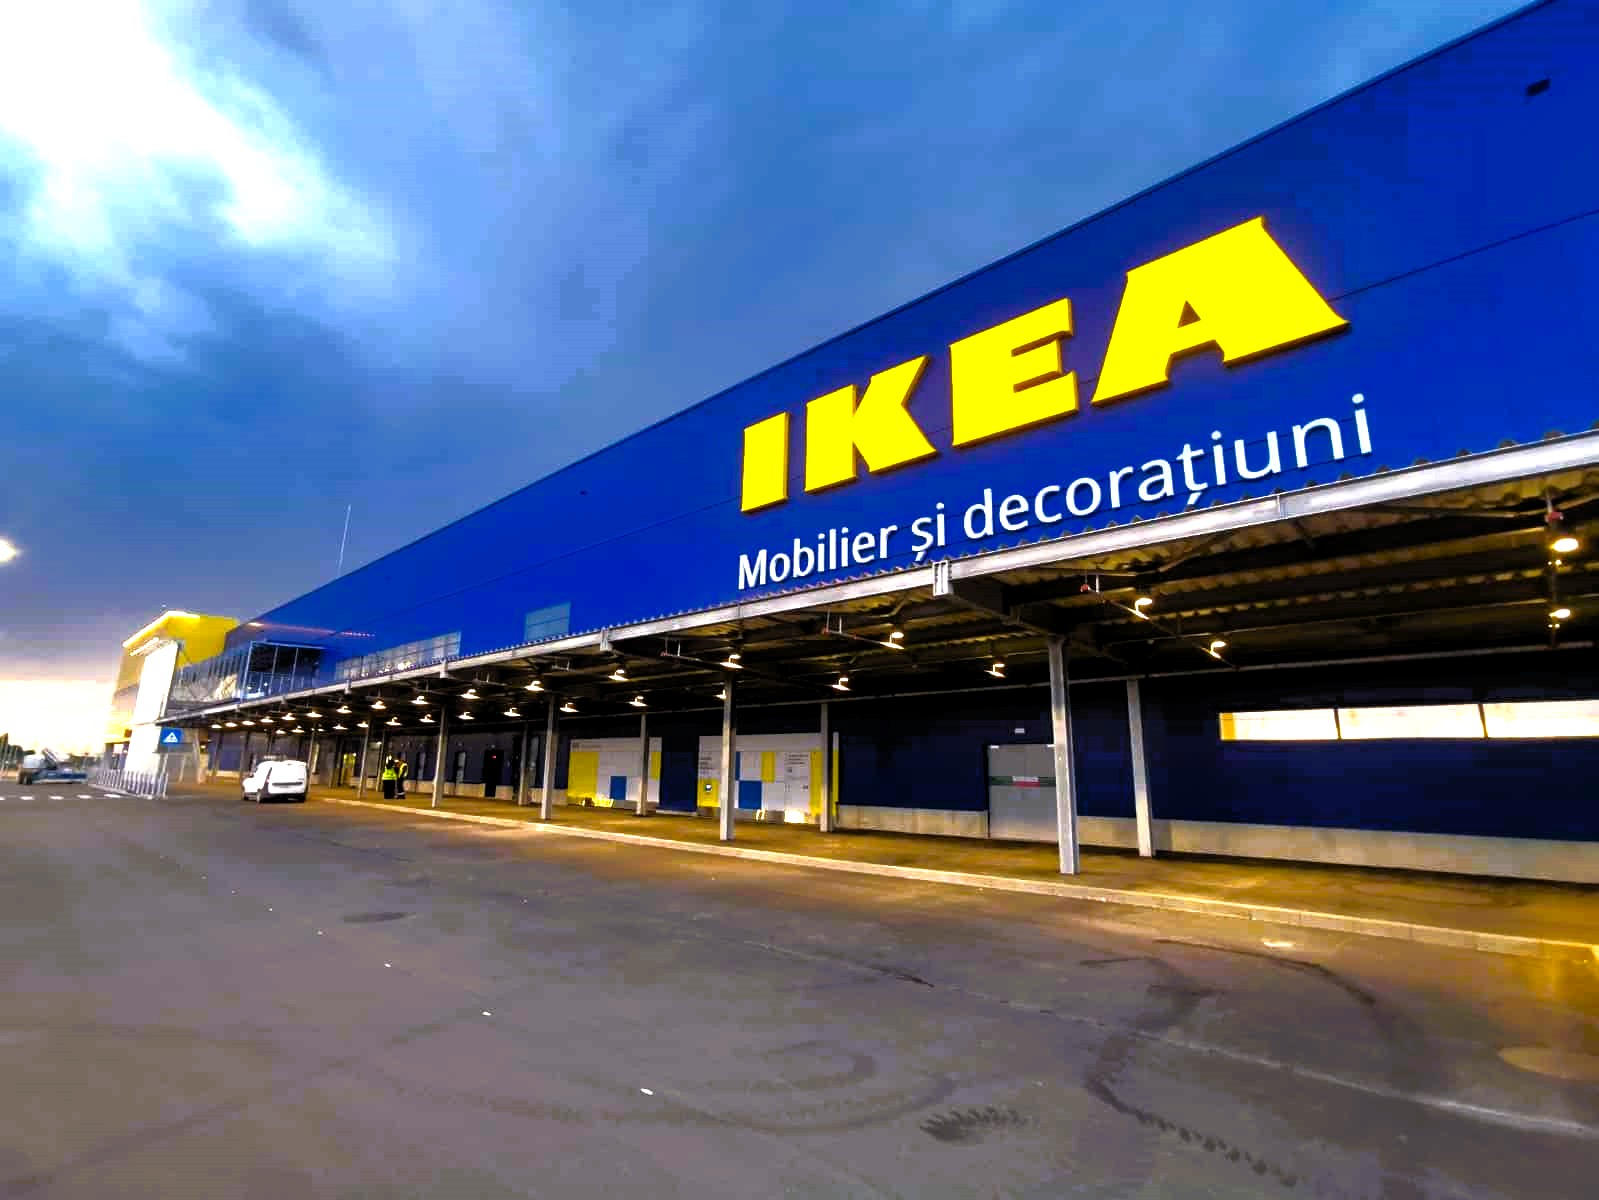 IKEA Anunta Deschiderea Primului Magazin in Moldova: zona Pacurari, Iasi Devine Noul Hub de Mobilier si Decoratii